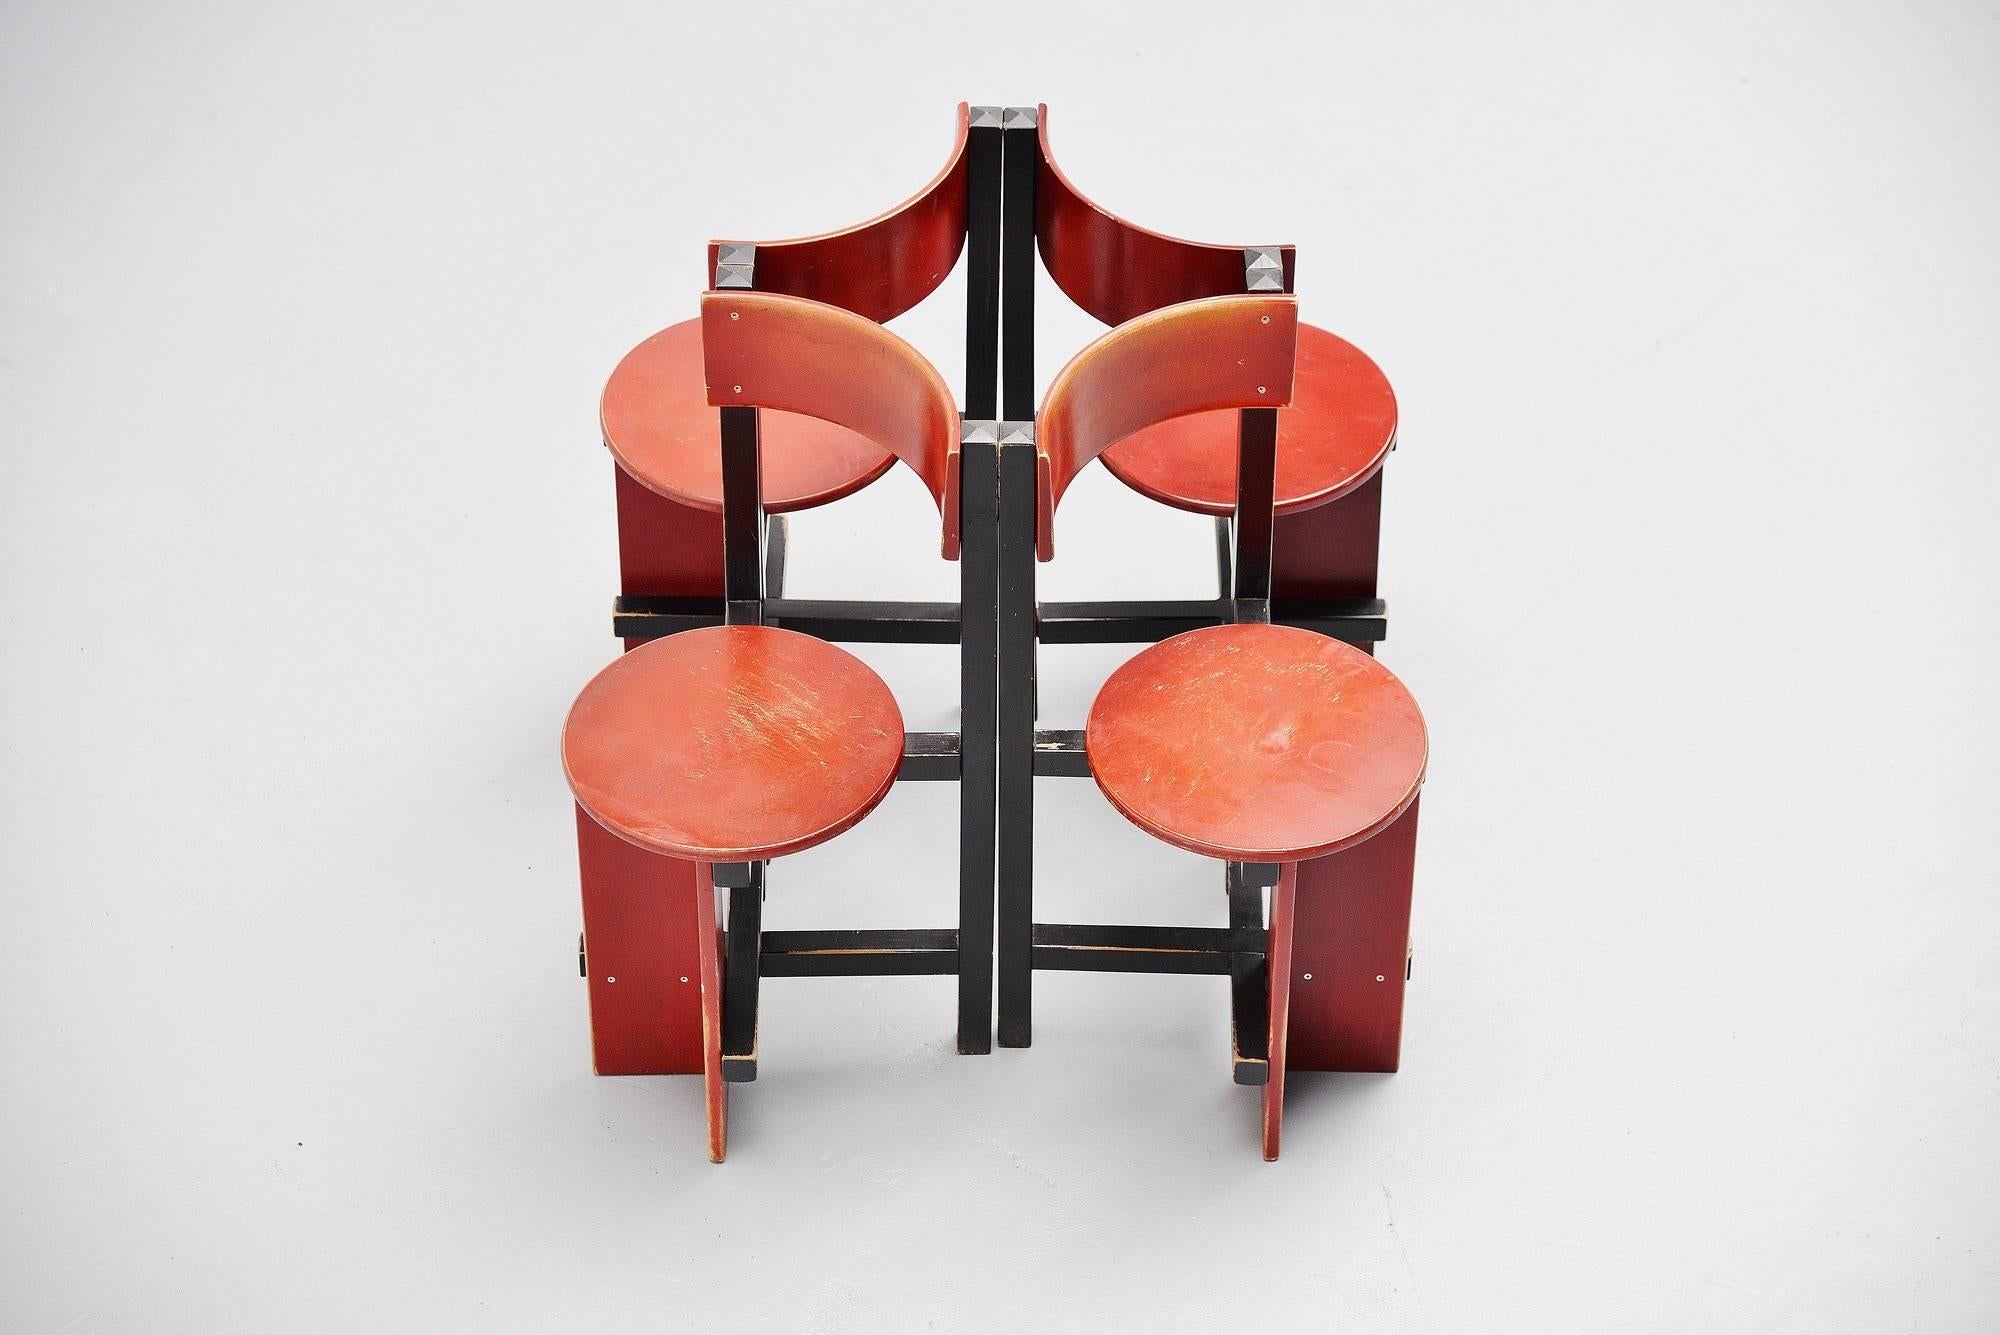 Piet Blom Bastille Chair for Twente Institute of Technology, 1964 For Sale 2